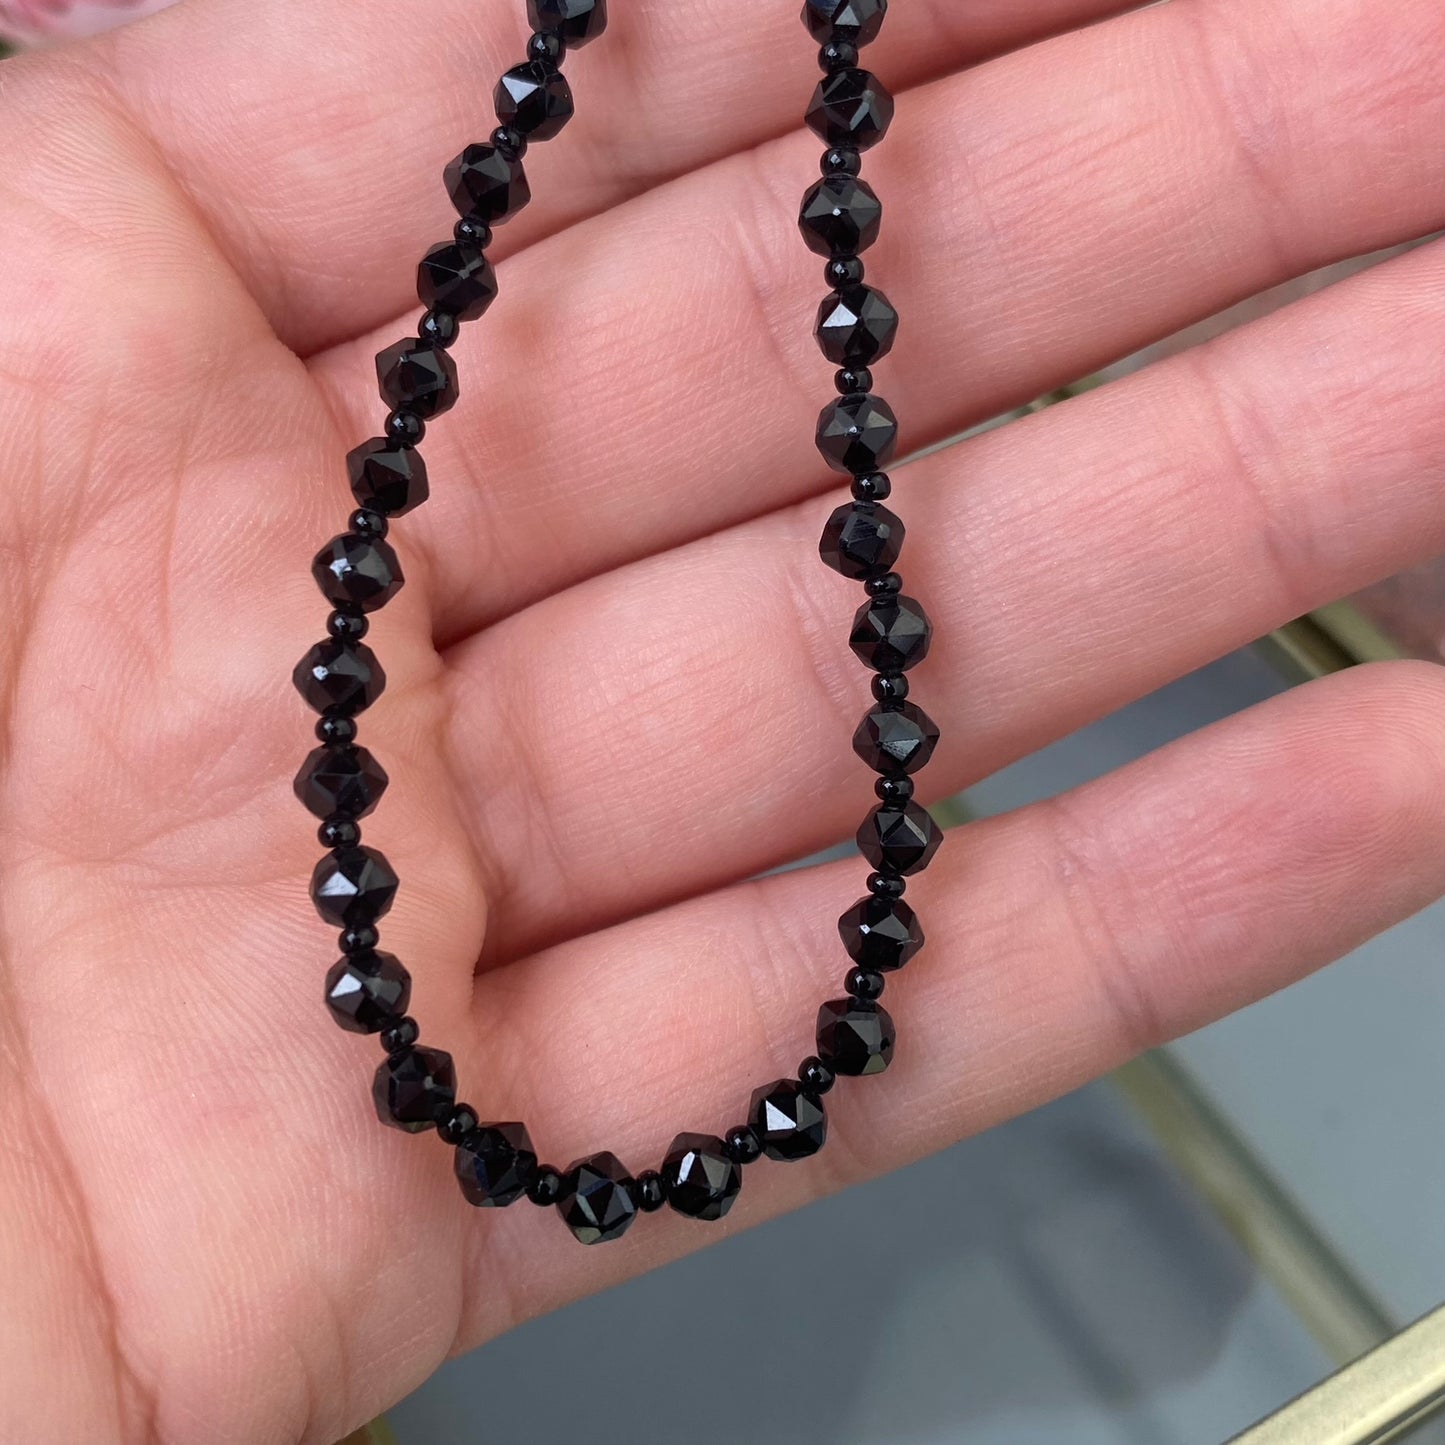 Black Tourmaline necklace (Black Tourmaline 4mm, polished shape, 45cm)